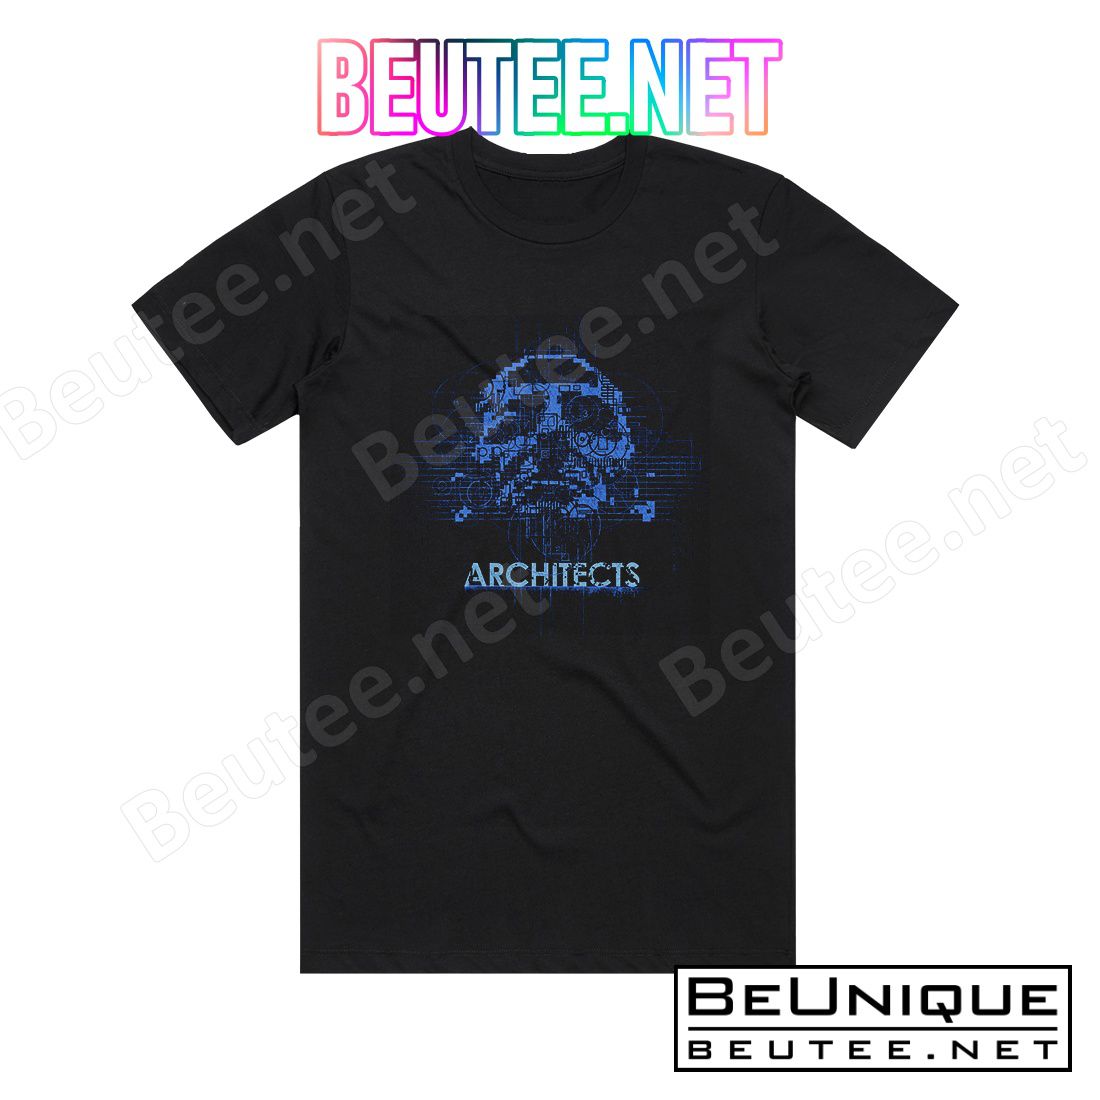 Architects Demo 2005 Album Cover T-Shirt